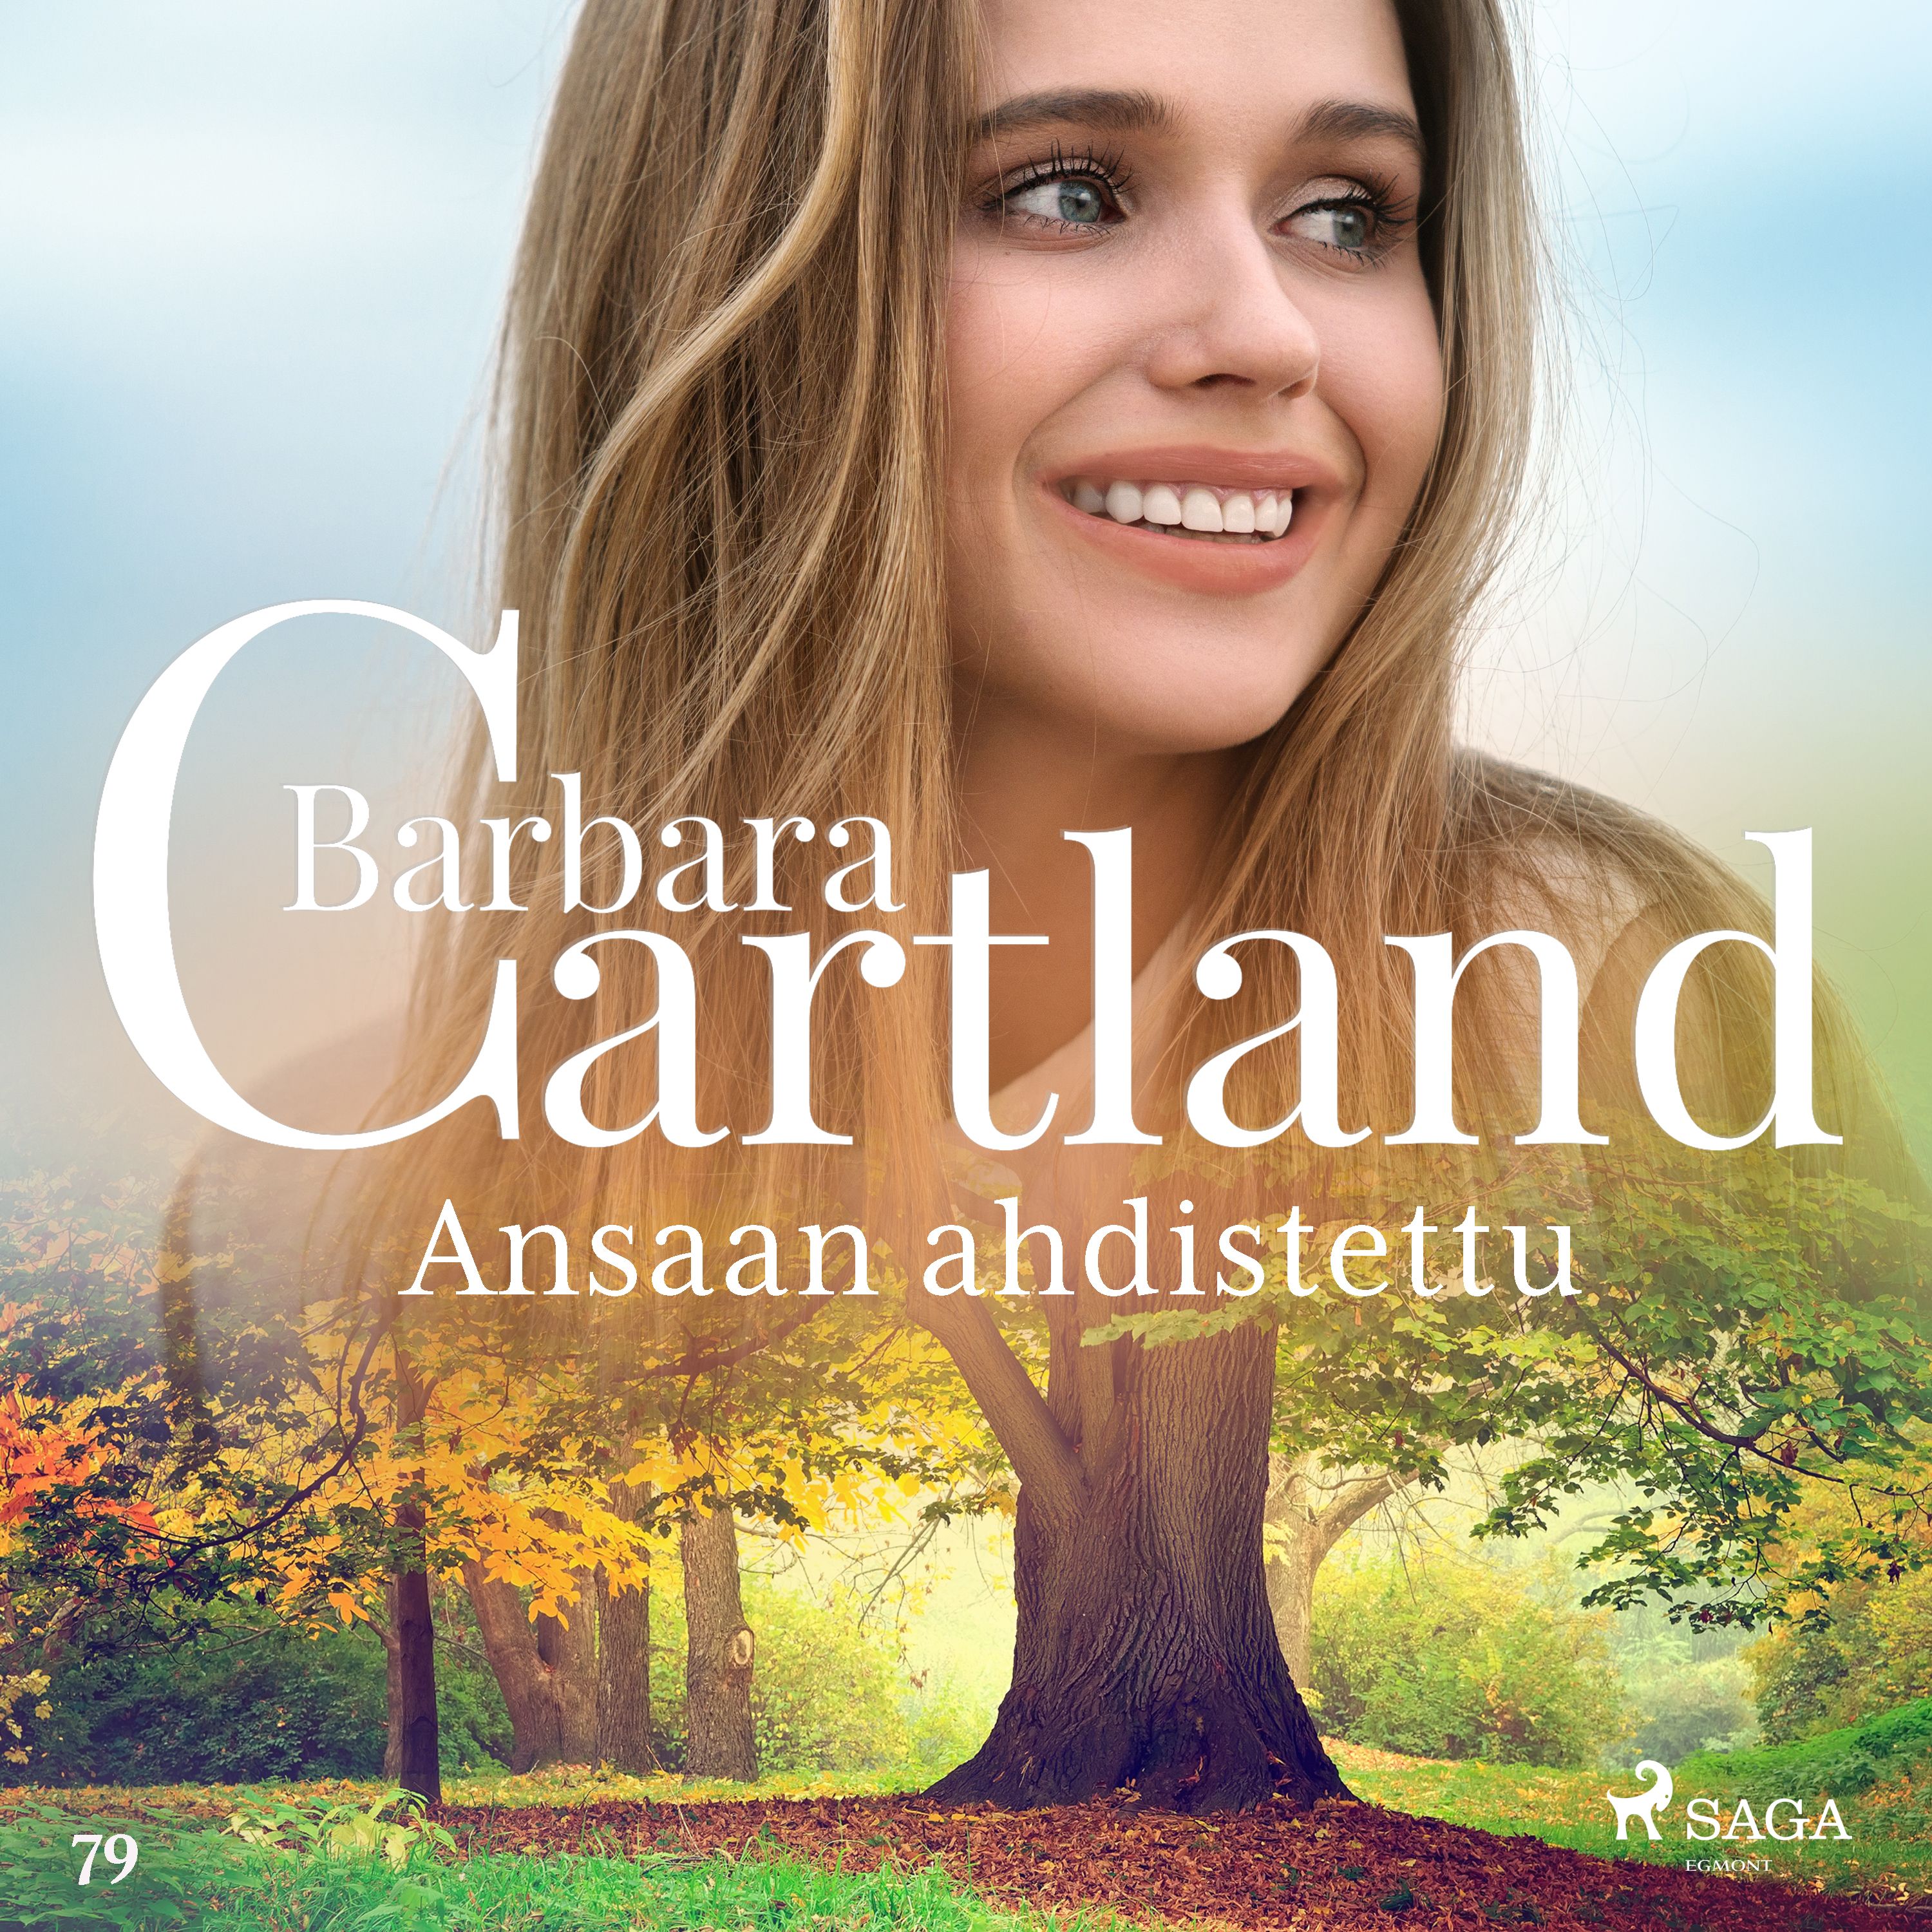 Ansaan ahdistettu, audiobook by Barbara Cartland